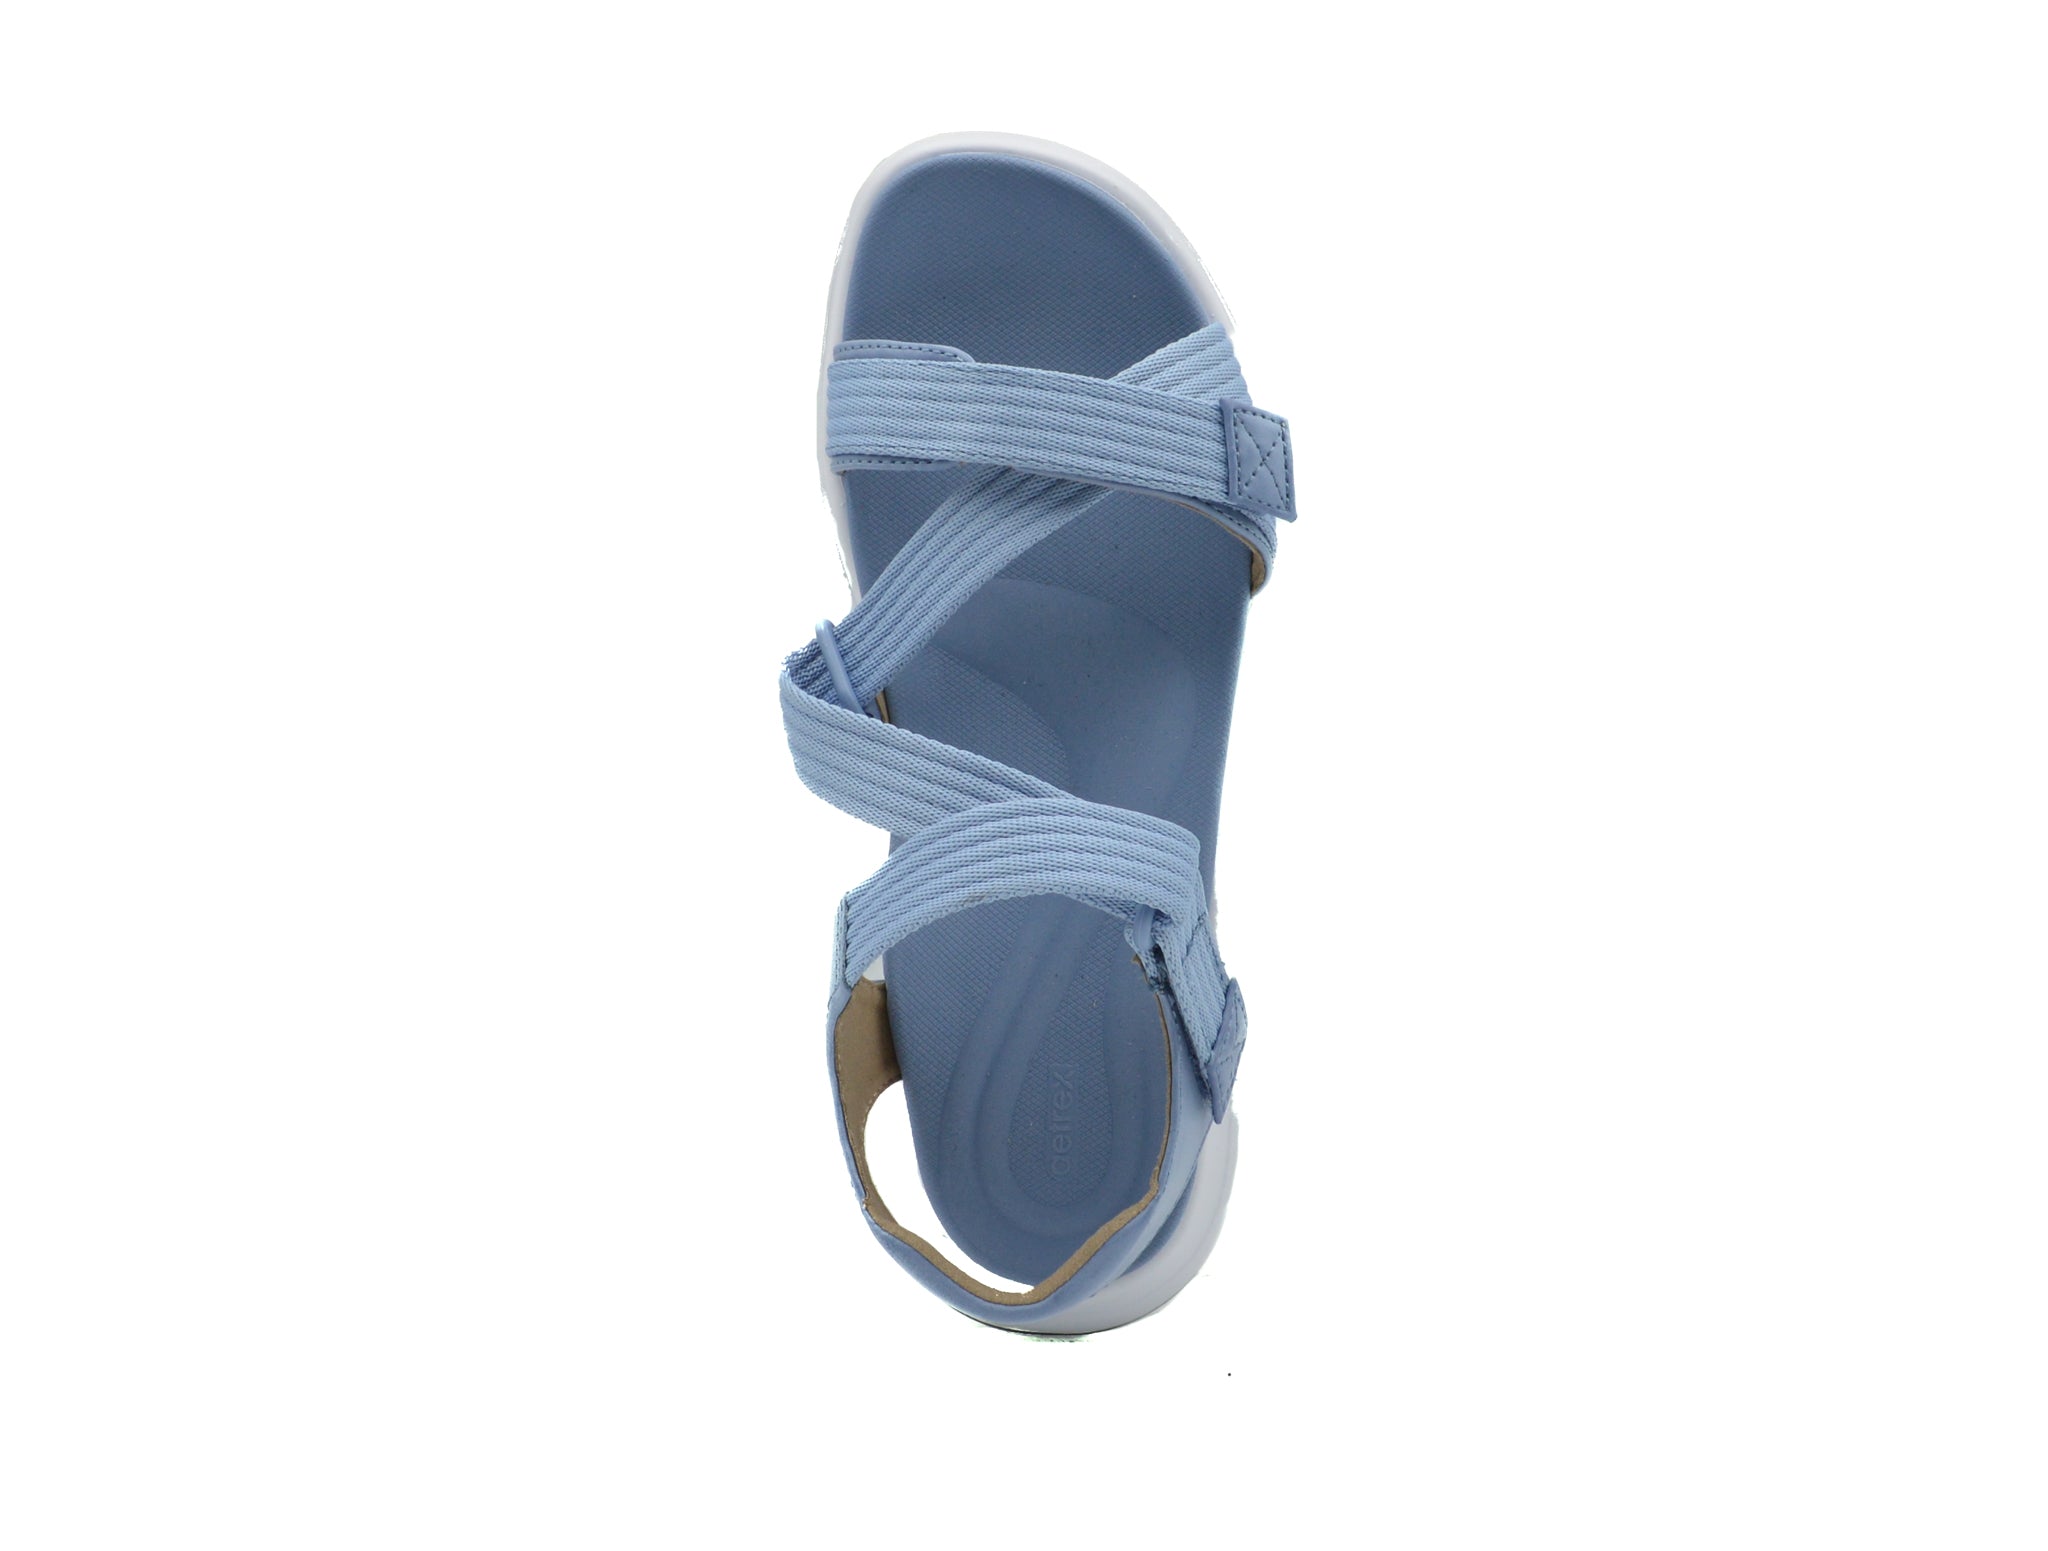 AETREX Marz Adjustable Sport Sandal